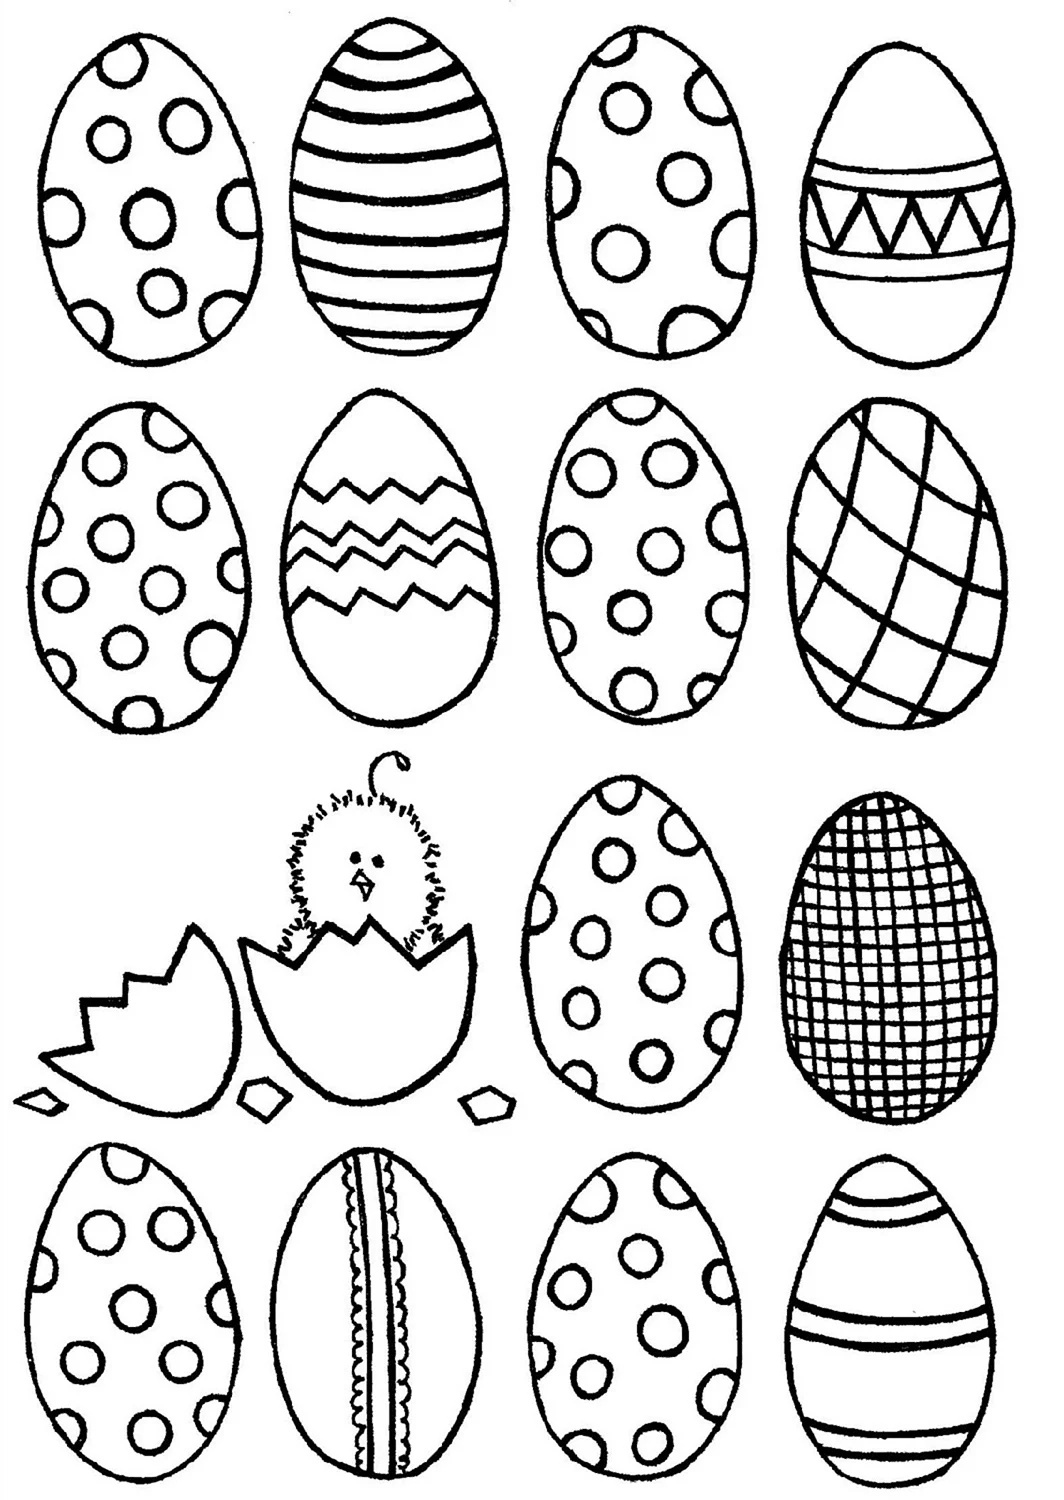 Распечатать раскраску яйца. Яйца на Пасху раскраска. Пасхальное яичко раскраска. Рисование пасхальное яйцо. Раскраски пасочных яиц.